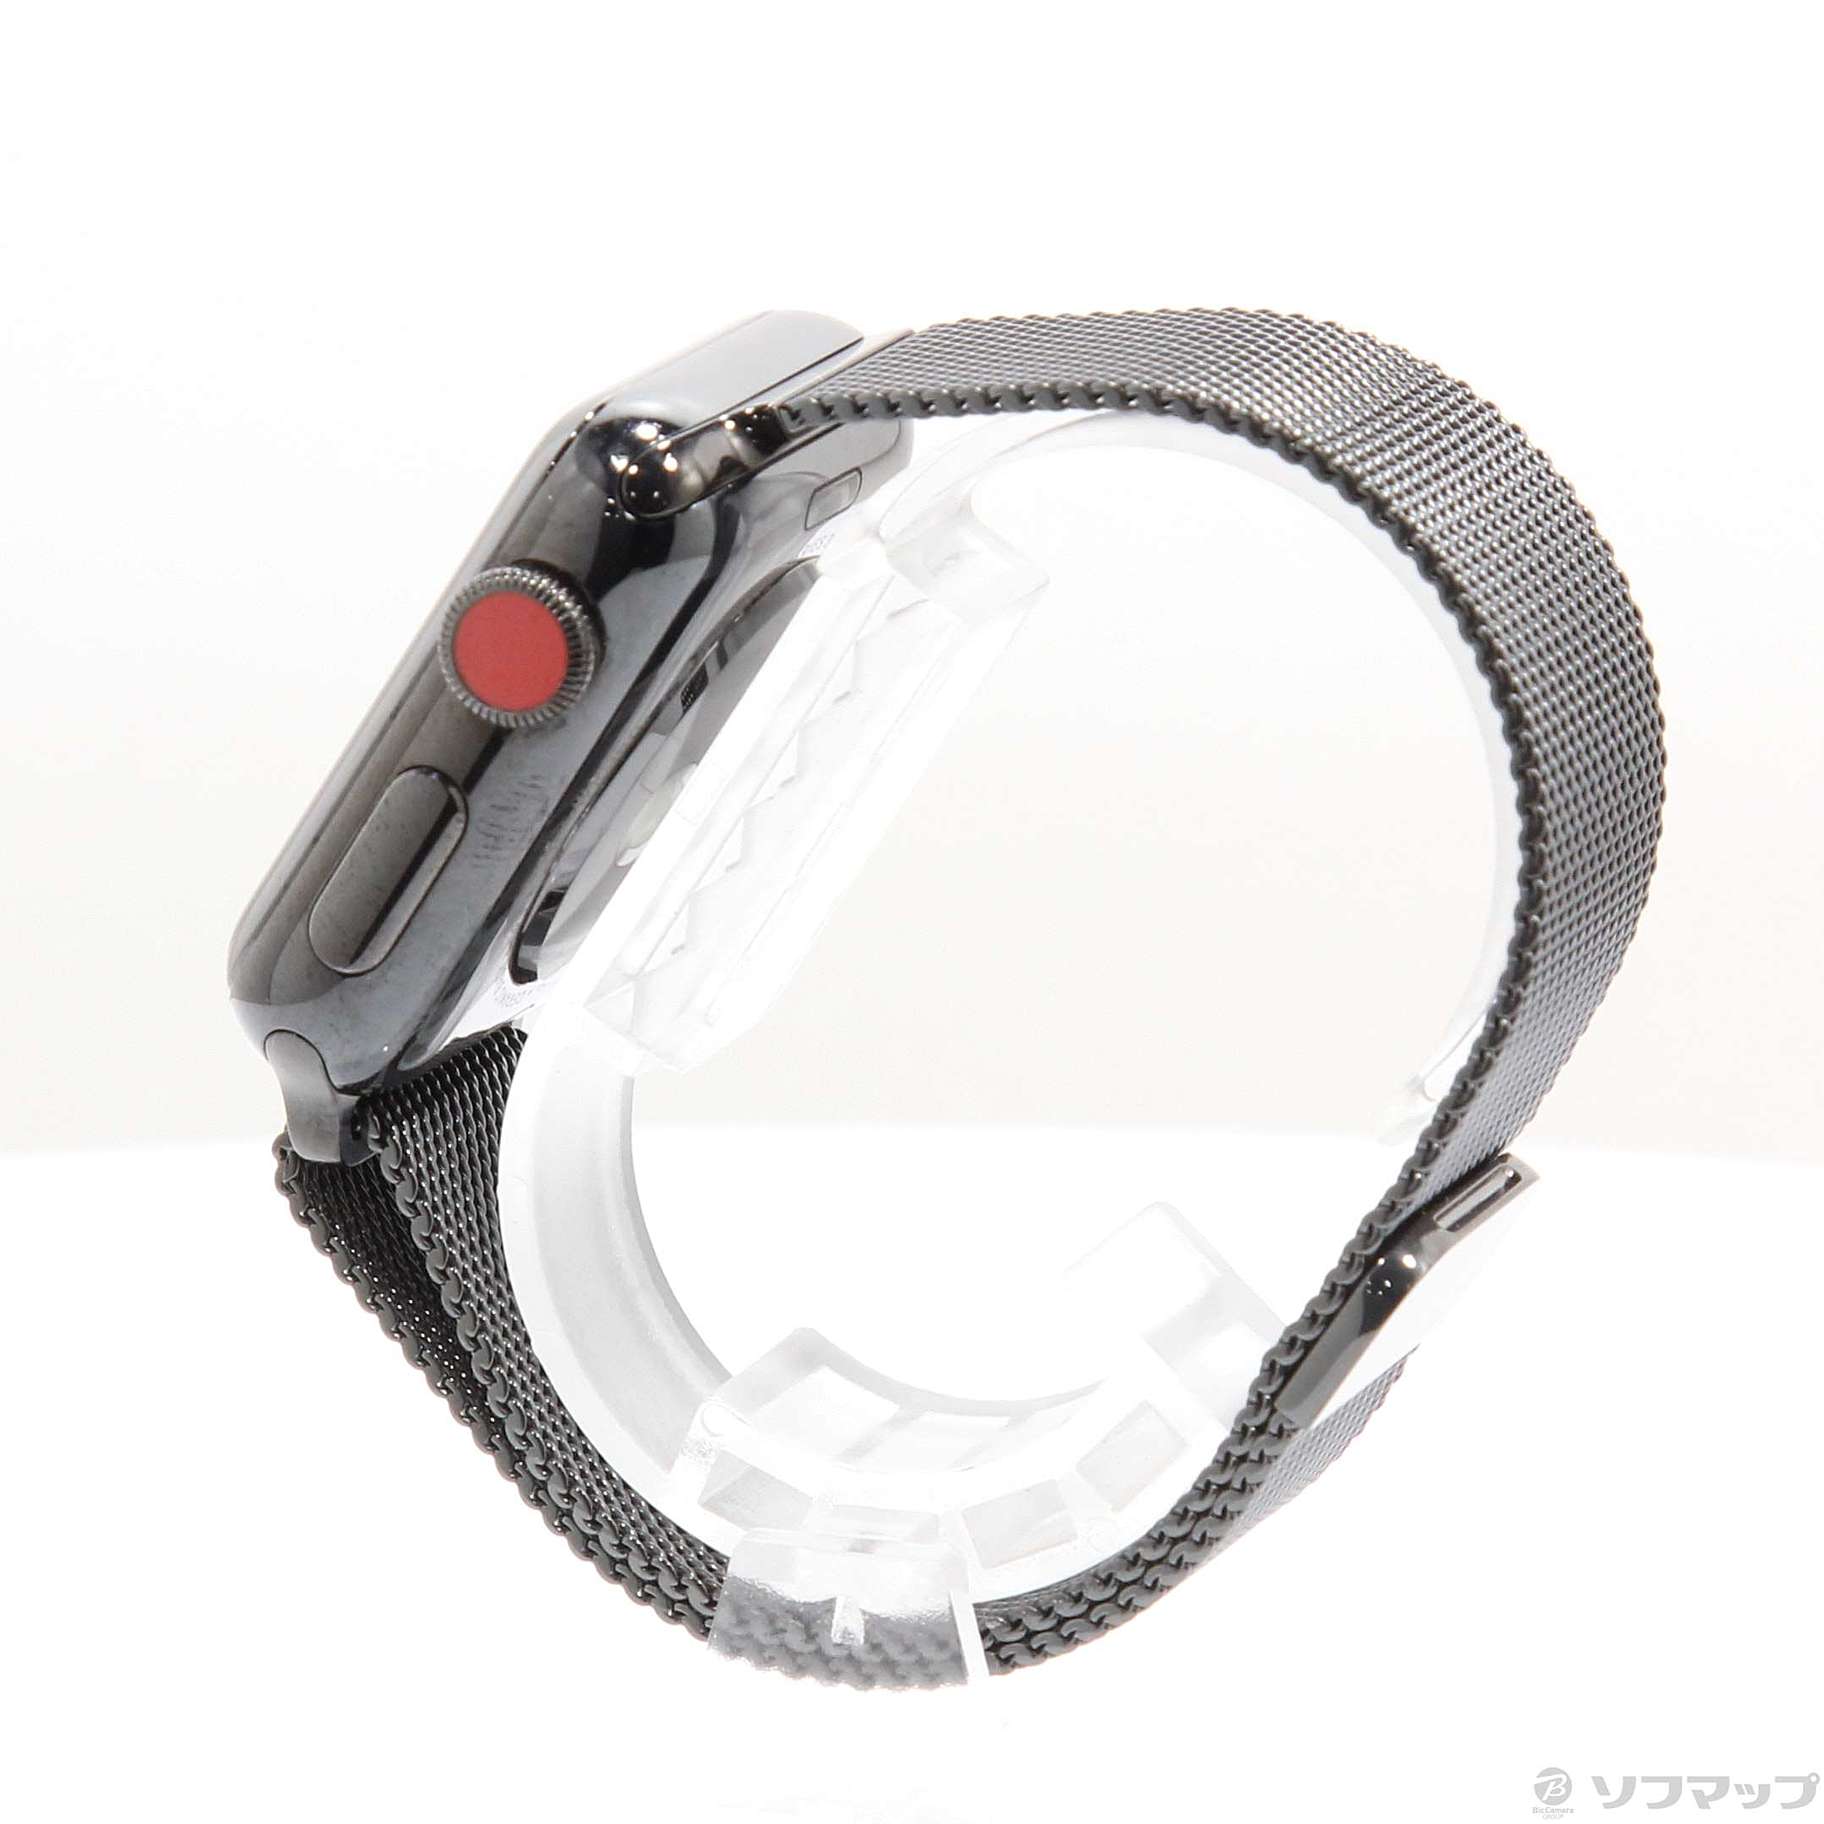 Apple Watch Series 3 GPS + Cellular 38mm スペースブラックステンレススチールケース  スペースブラックミラネーゼループ